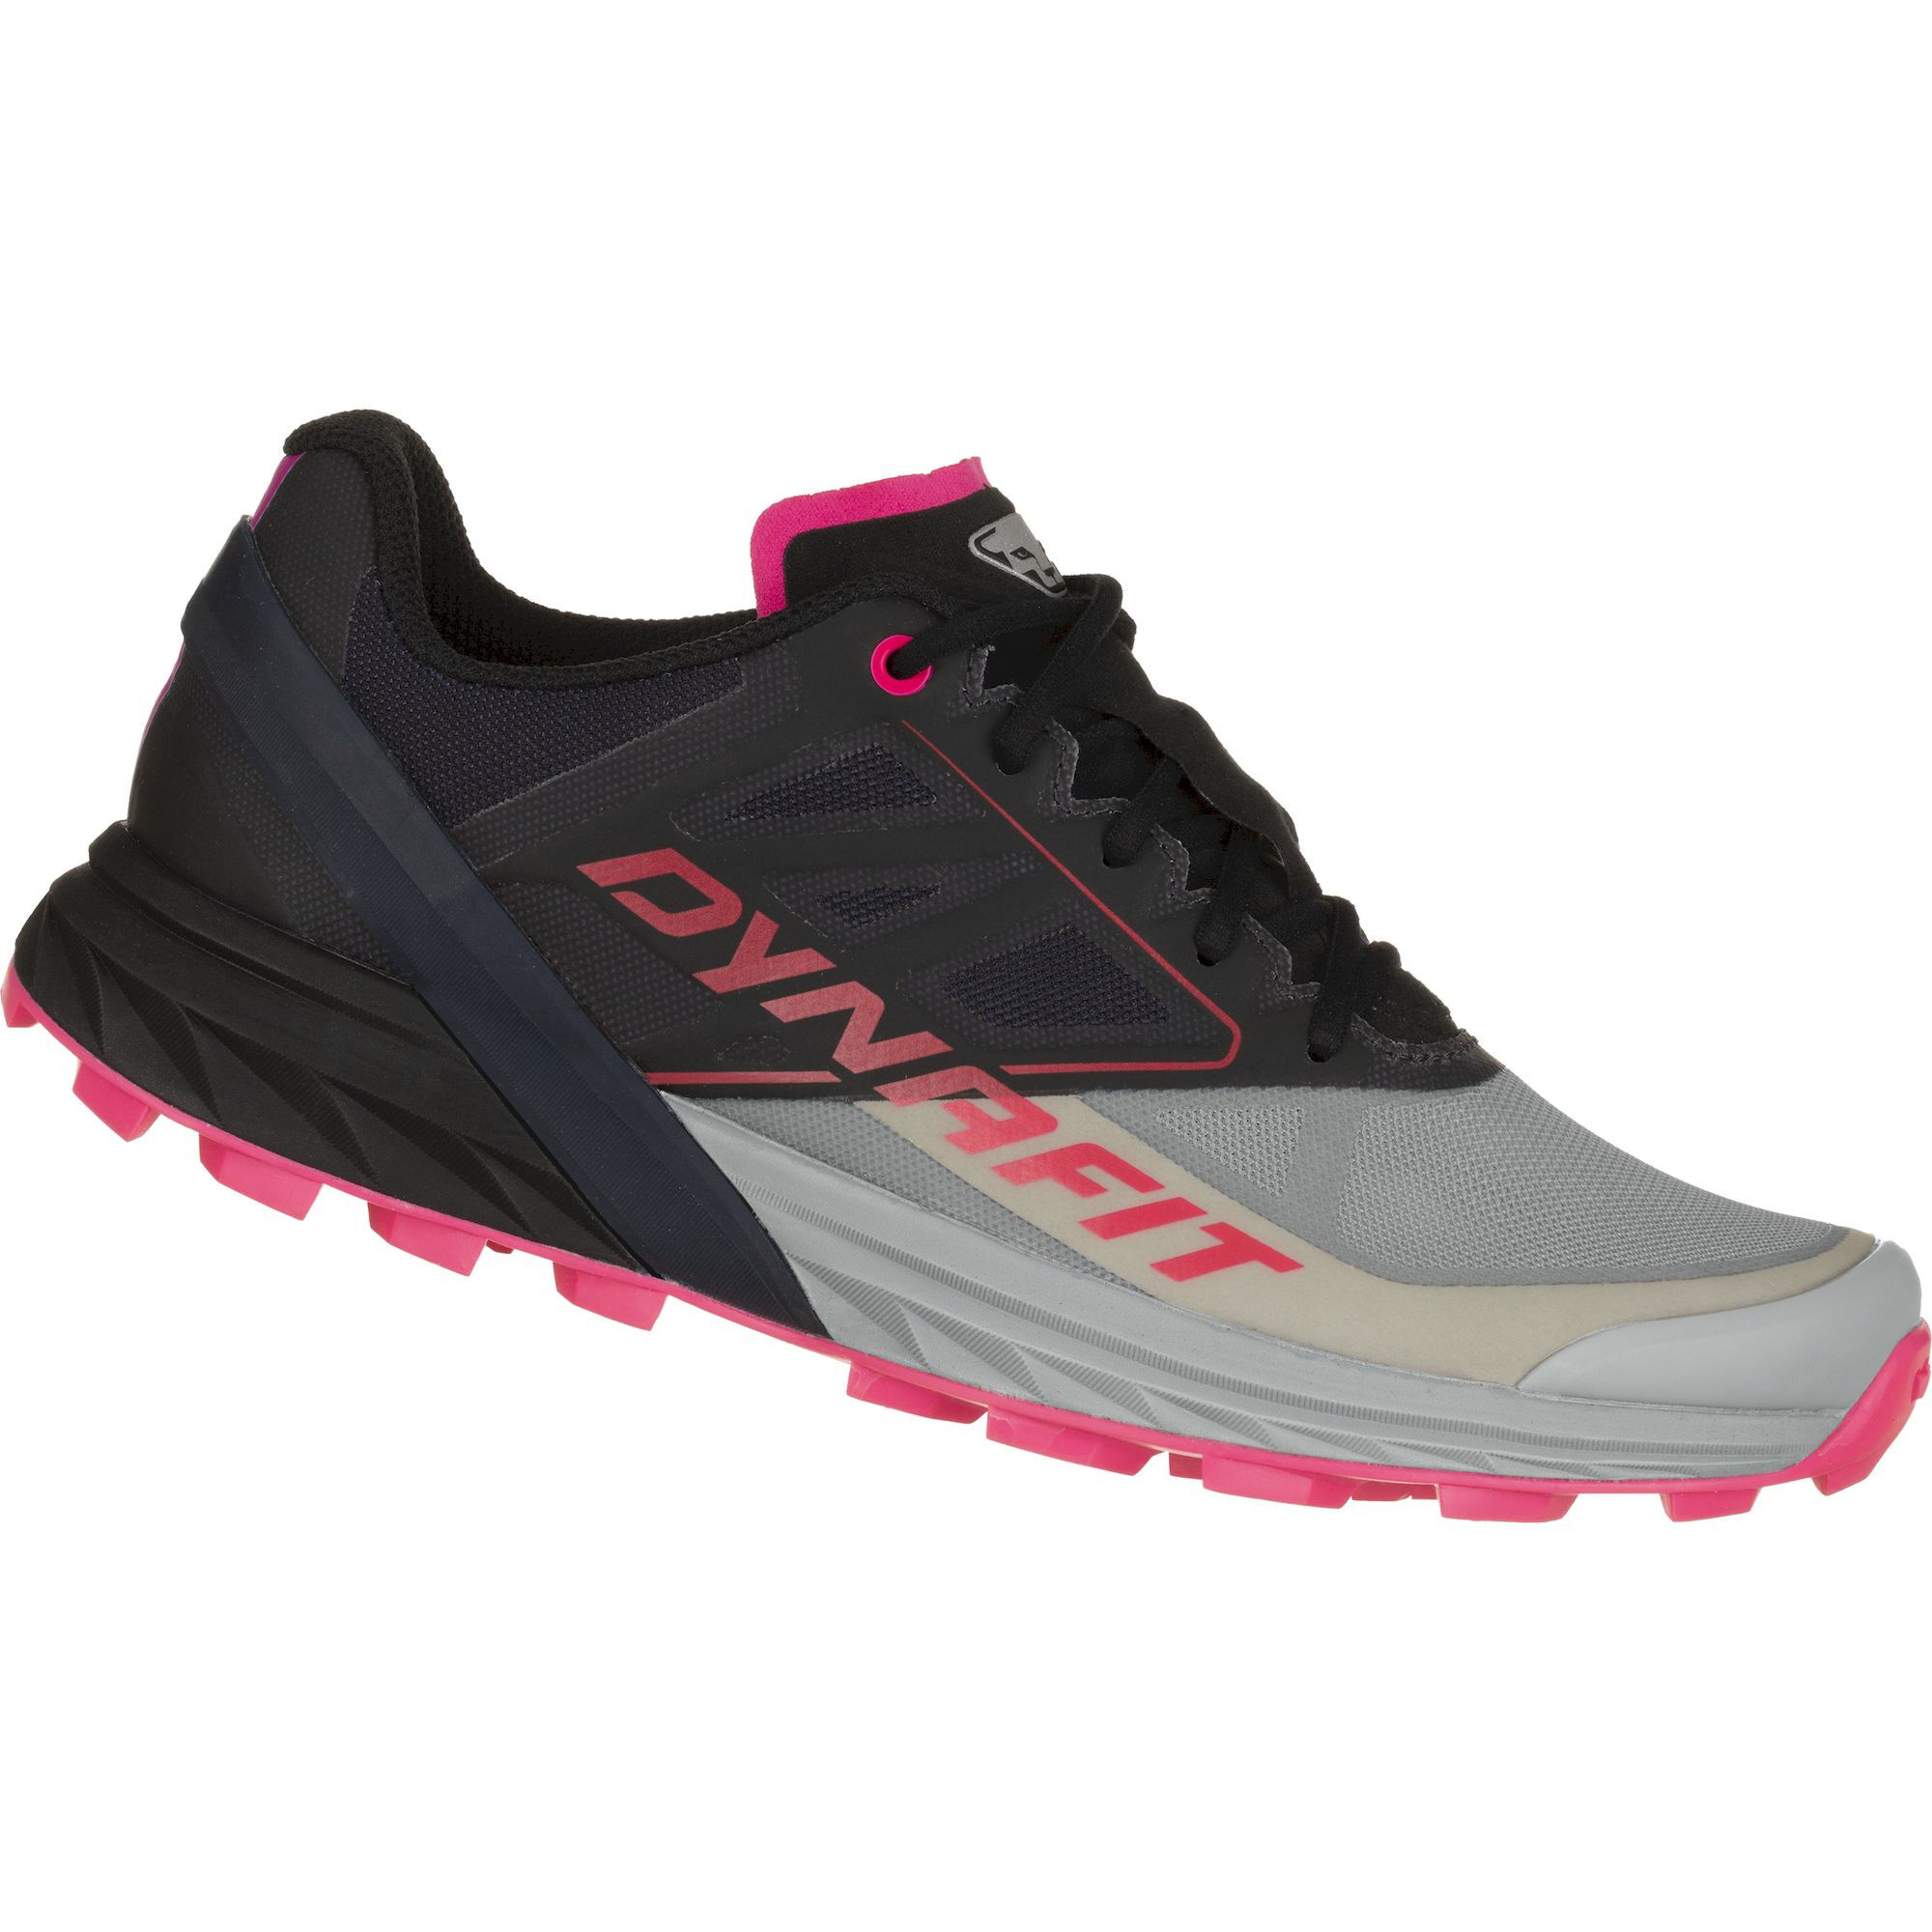 Dynafit Alpine W - Trail running shoes - Women's